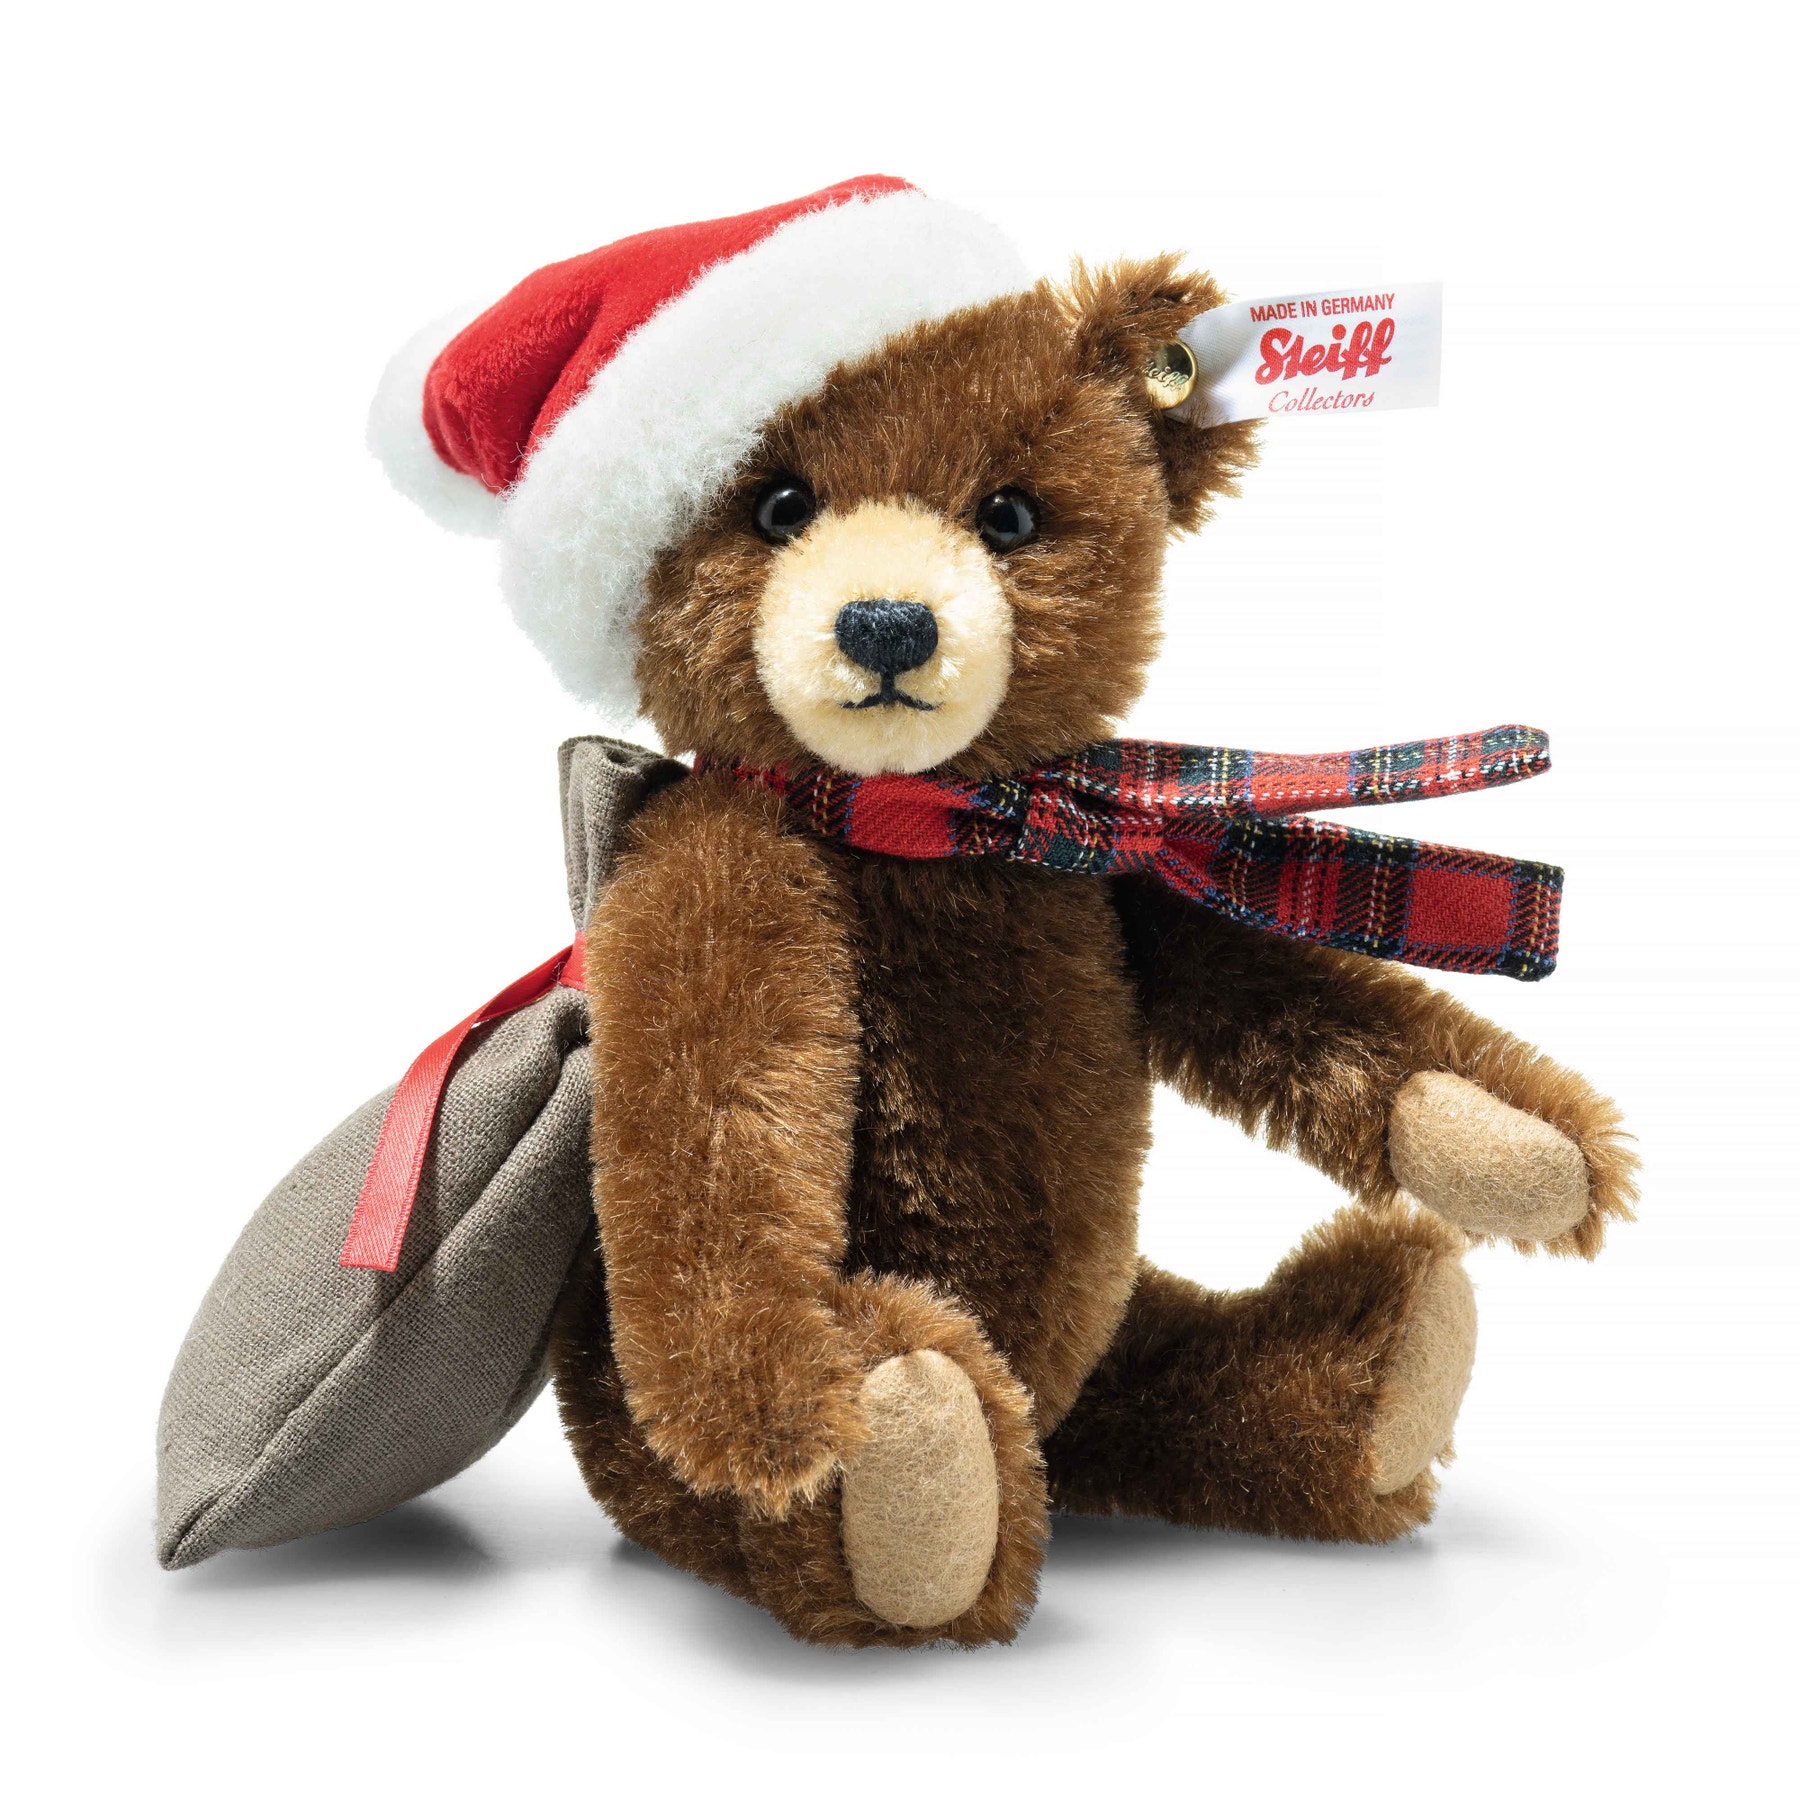 Santa Claus Teddy bear